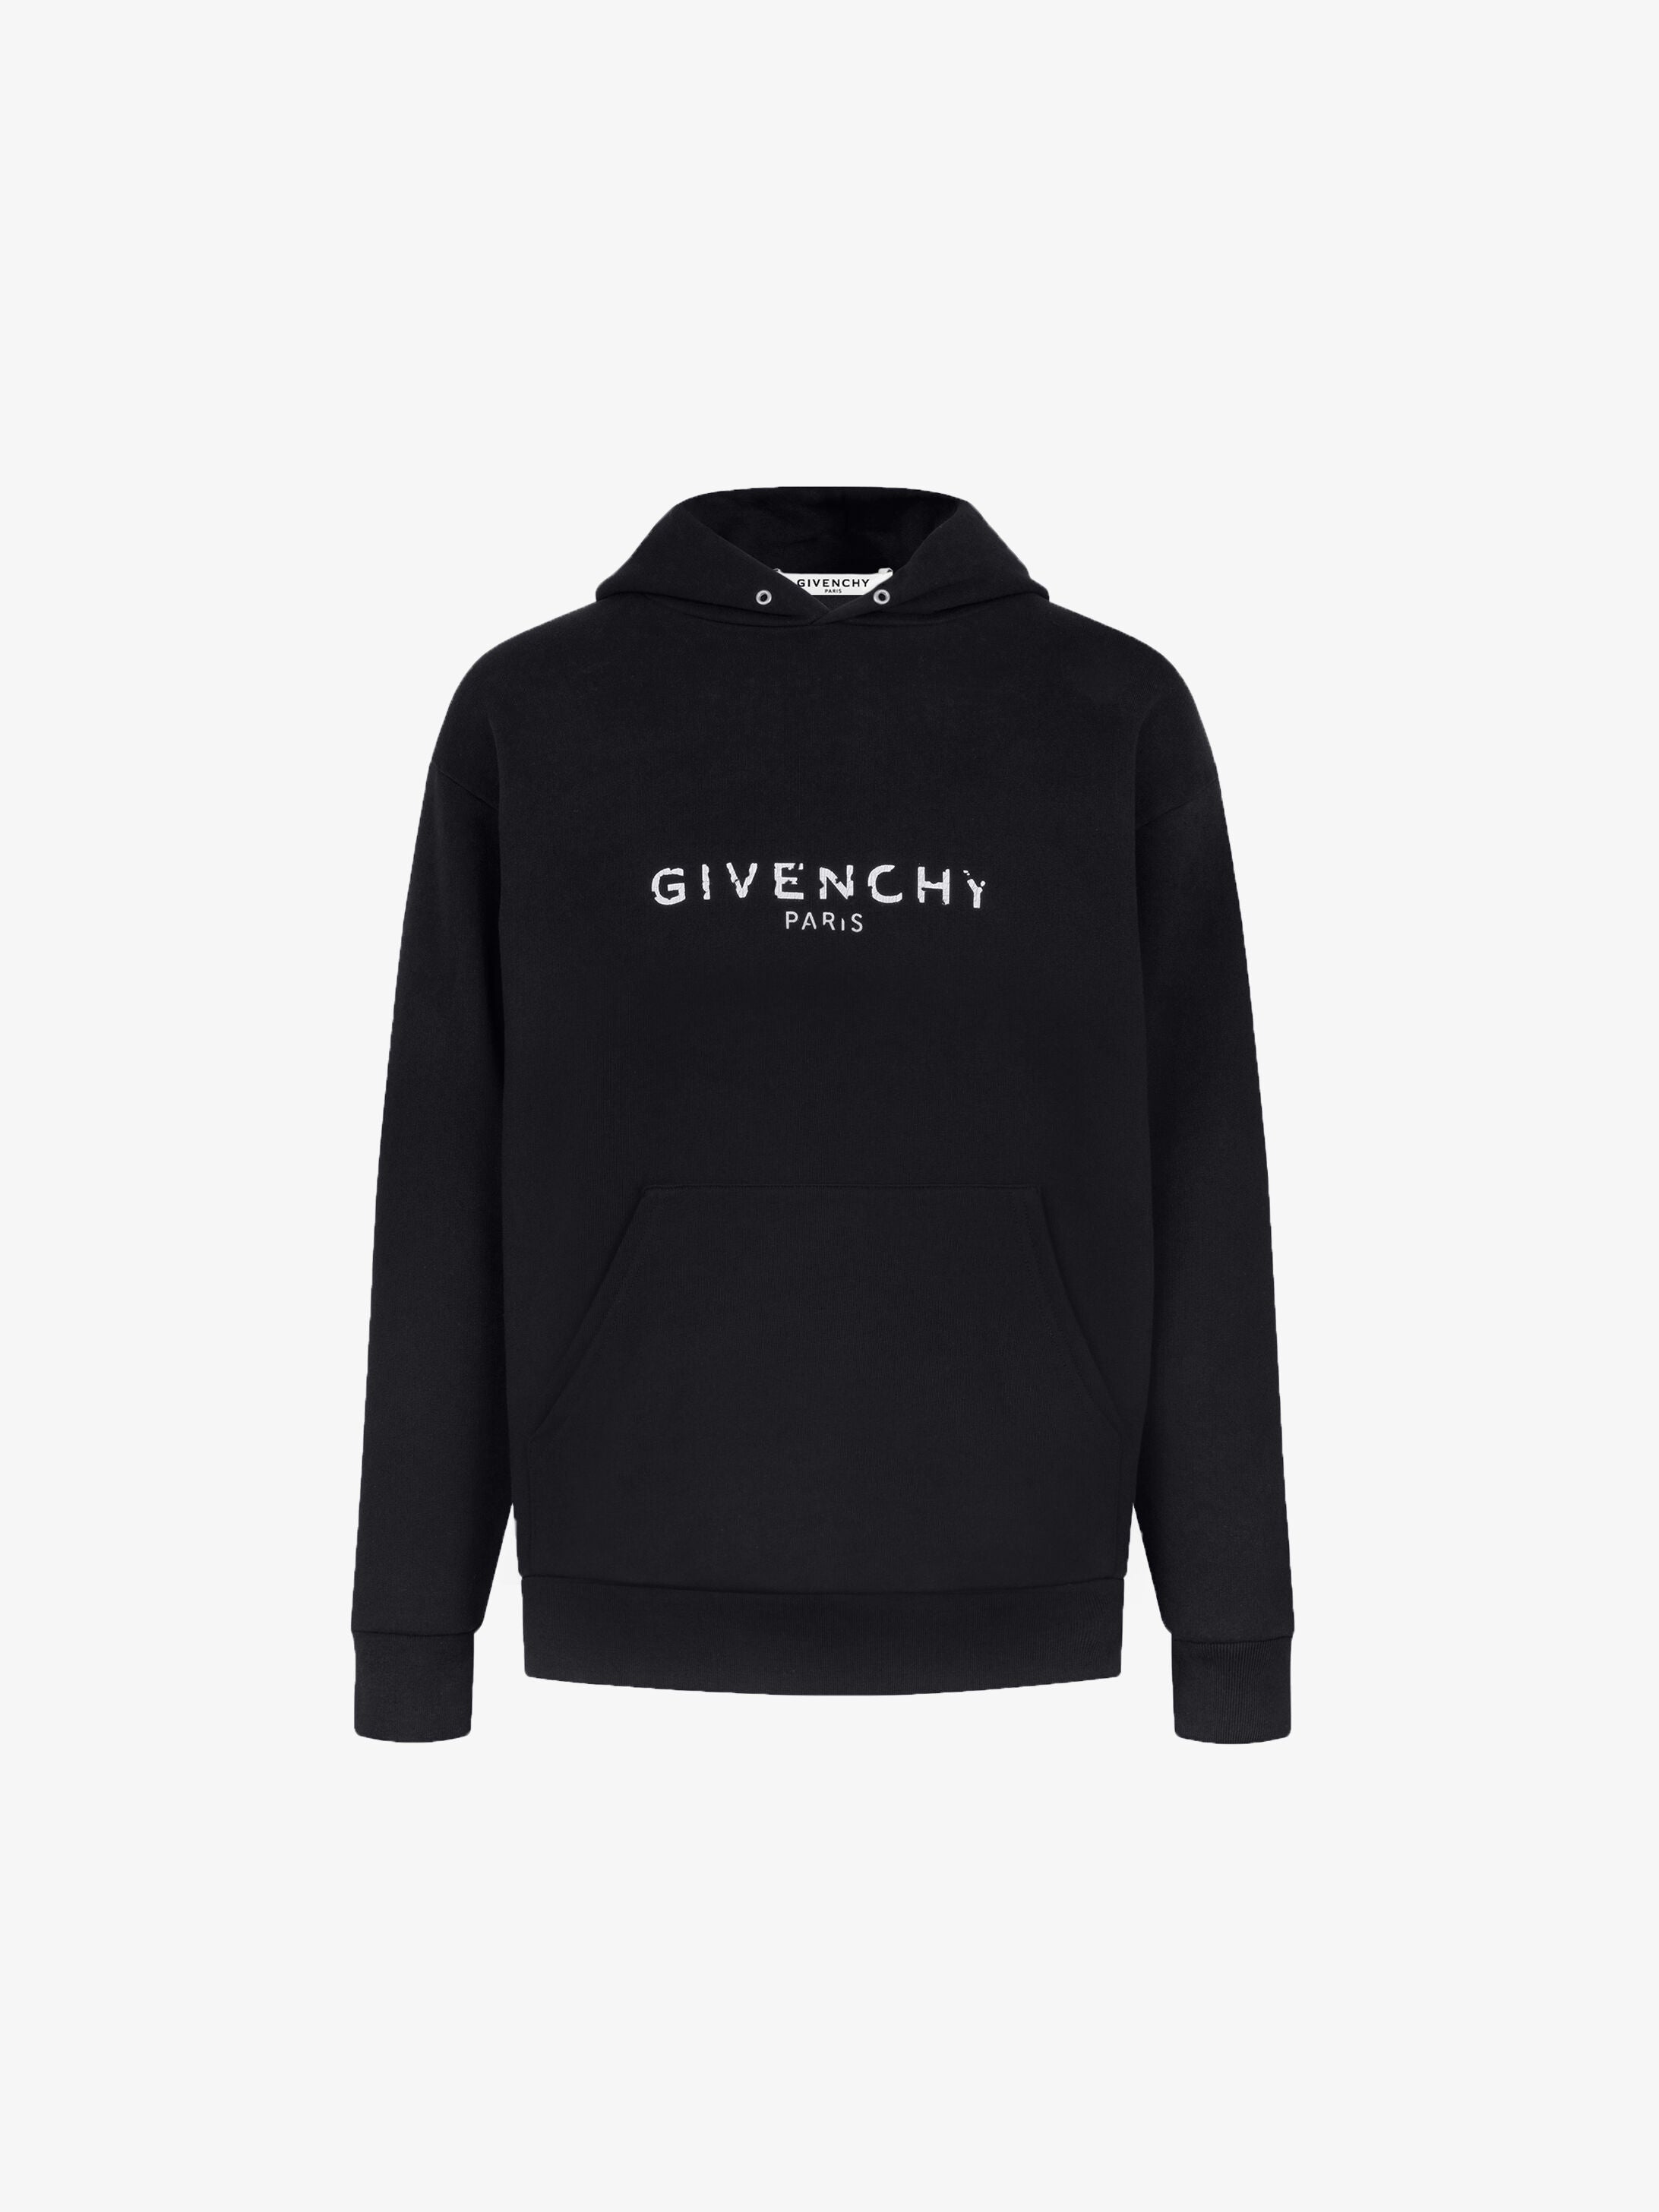 Givenchy Paris Logo Hoodie Black